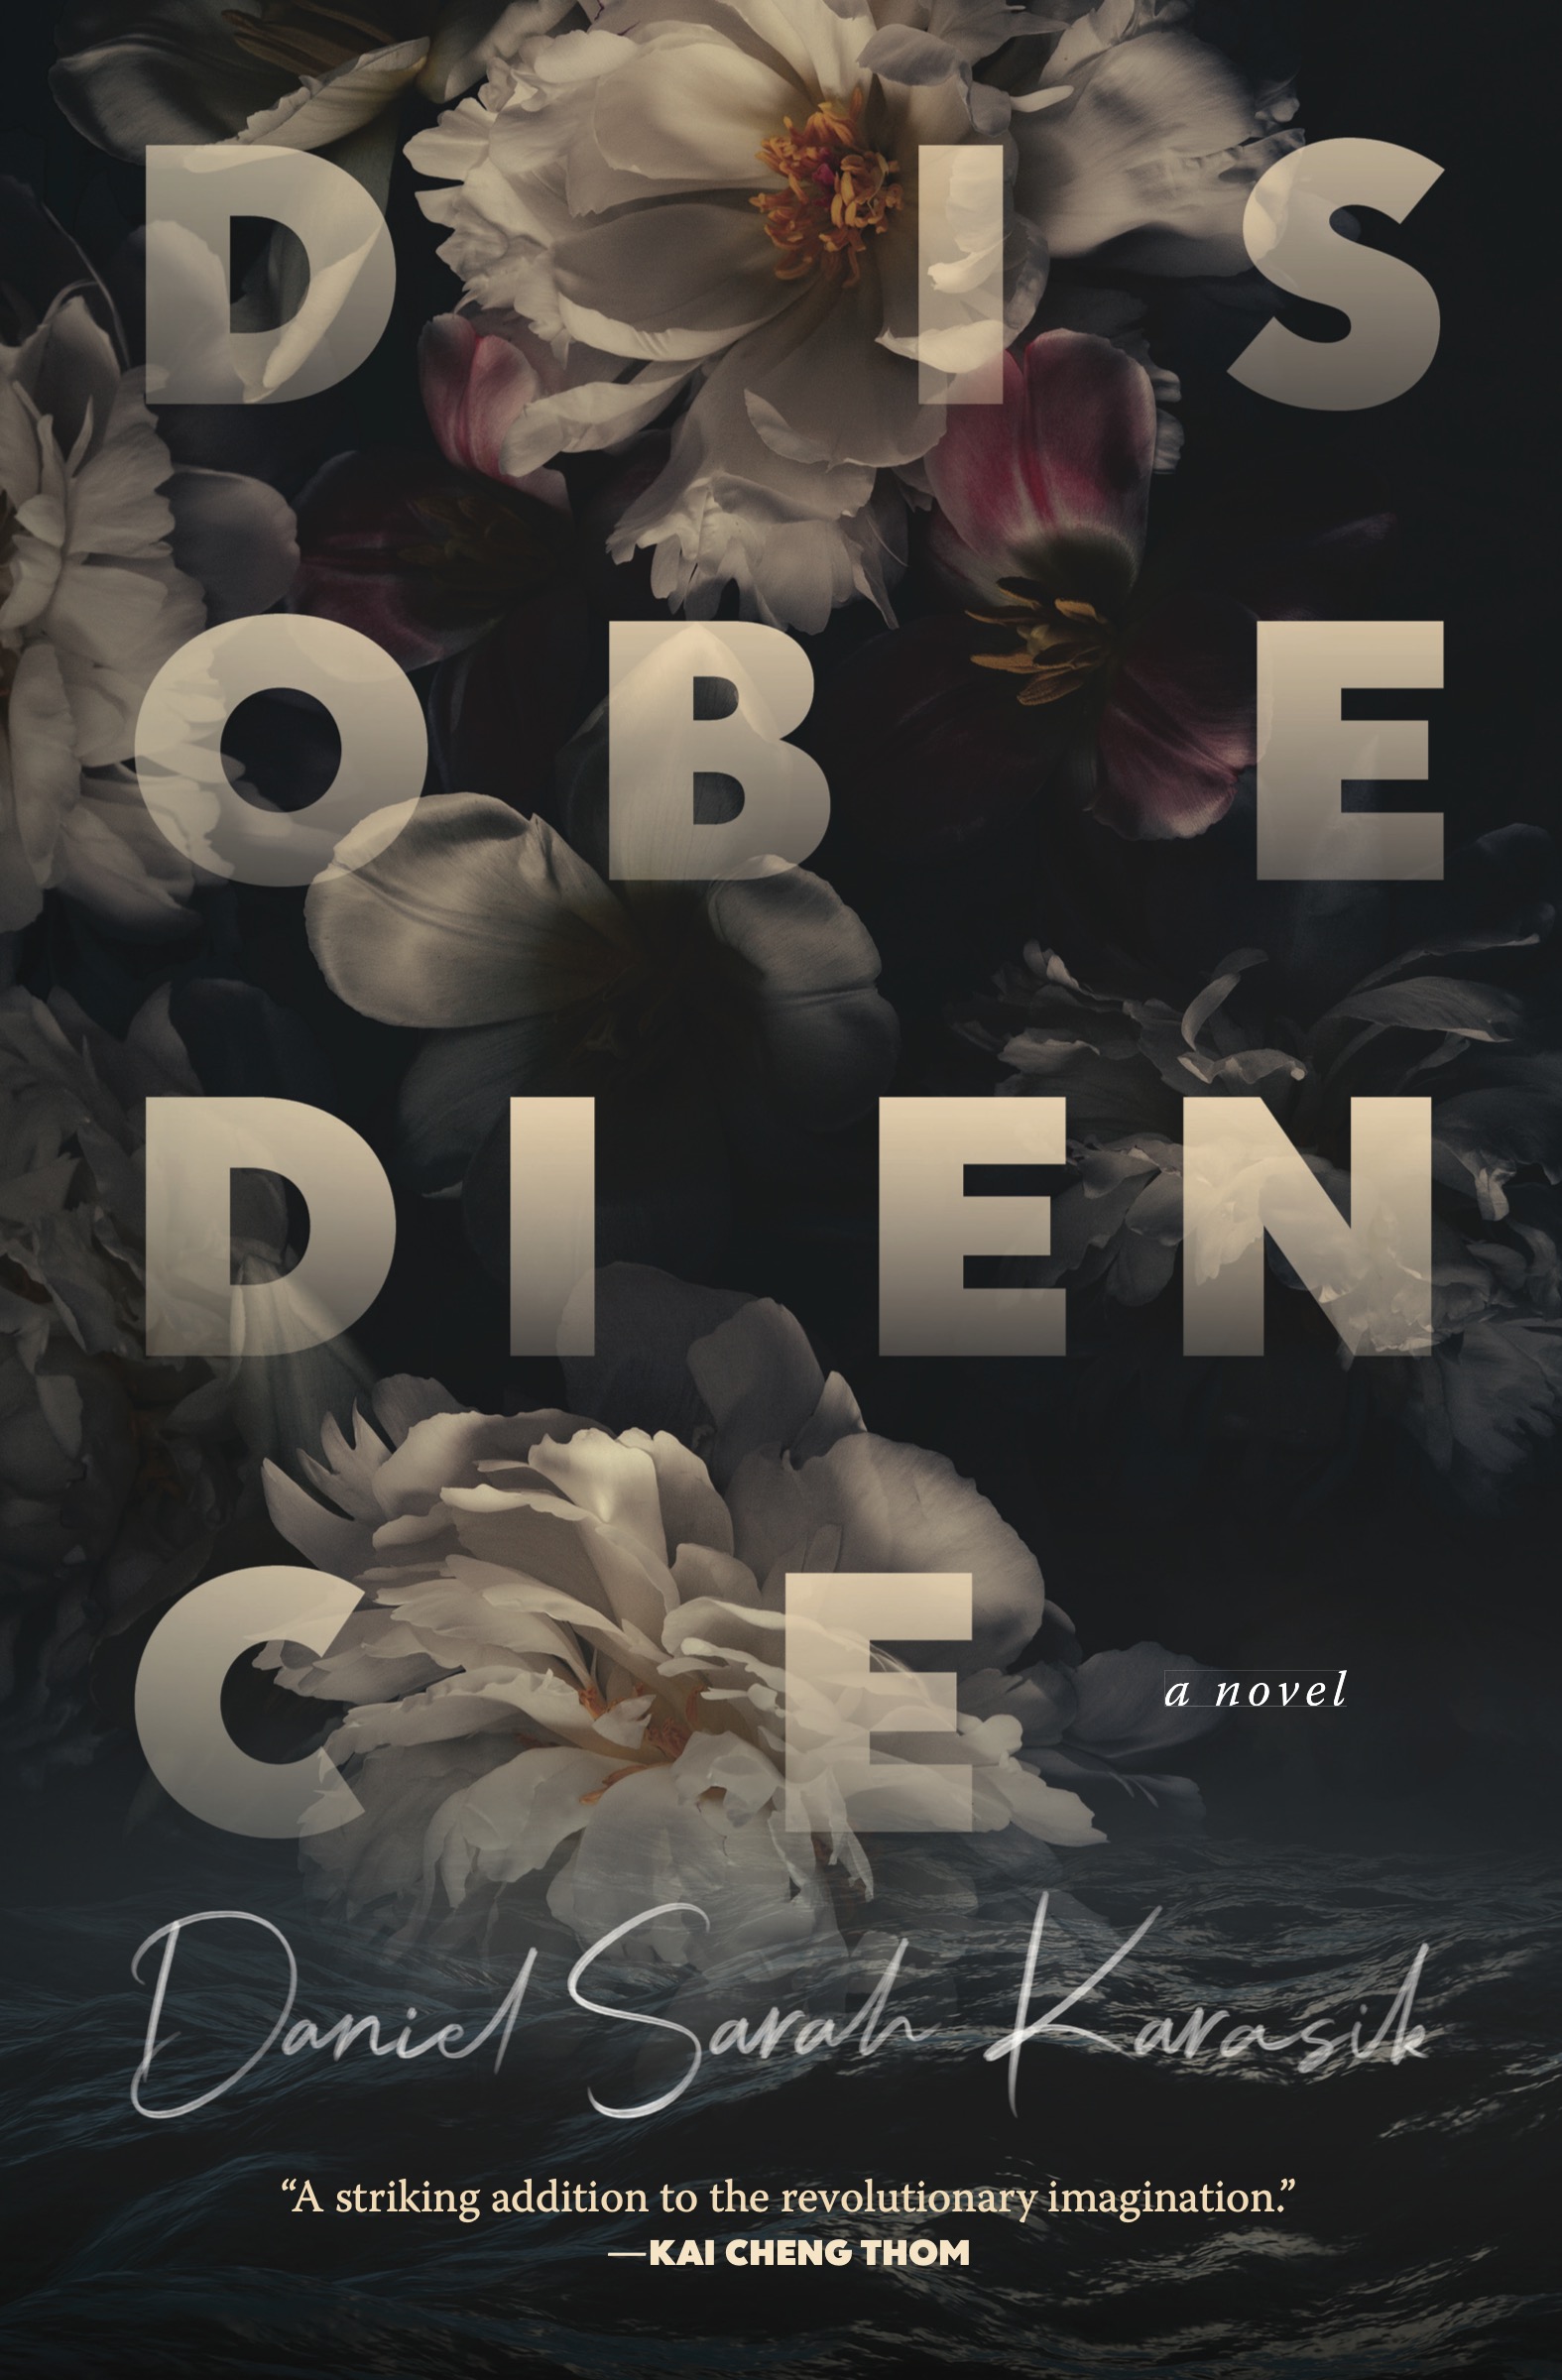 The cover of Disobedience by Daniel Sarah Karasik.